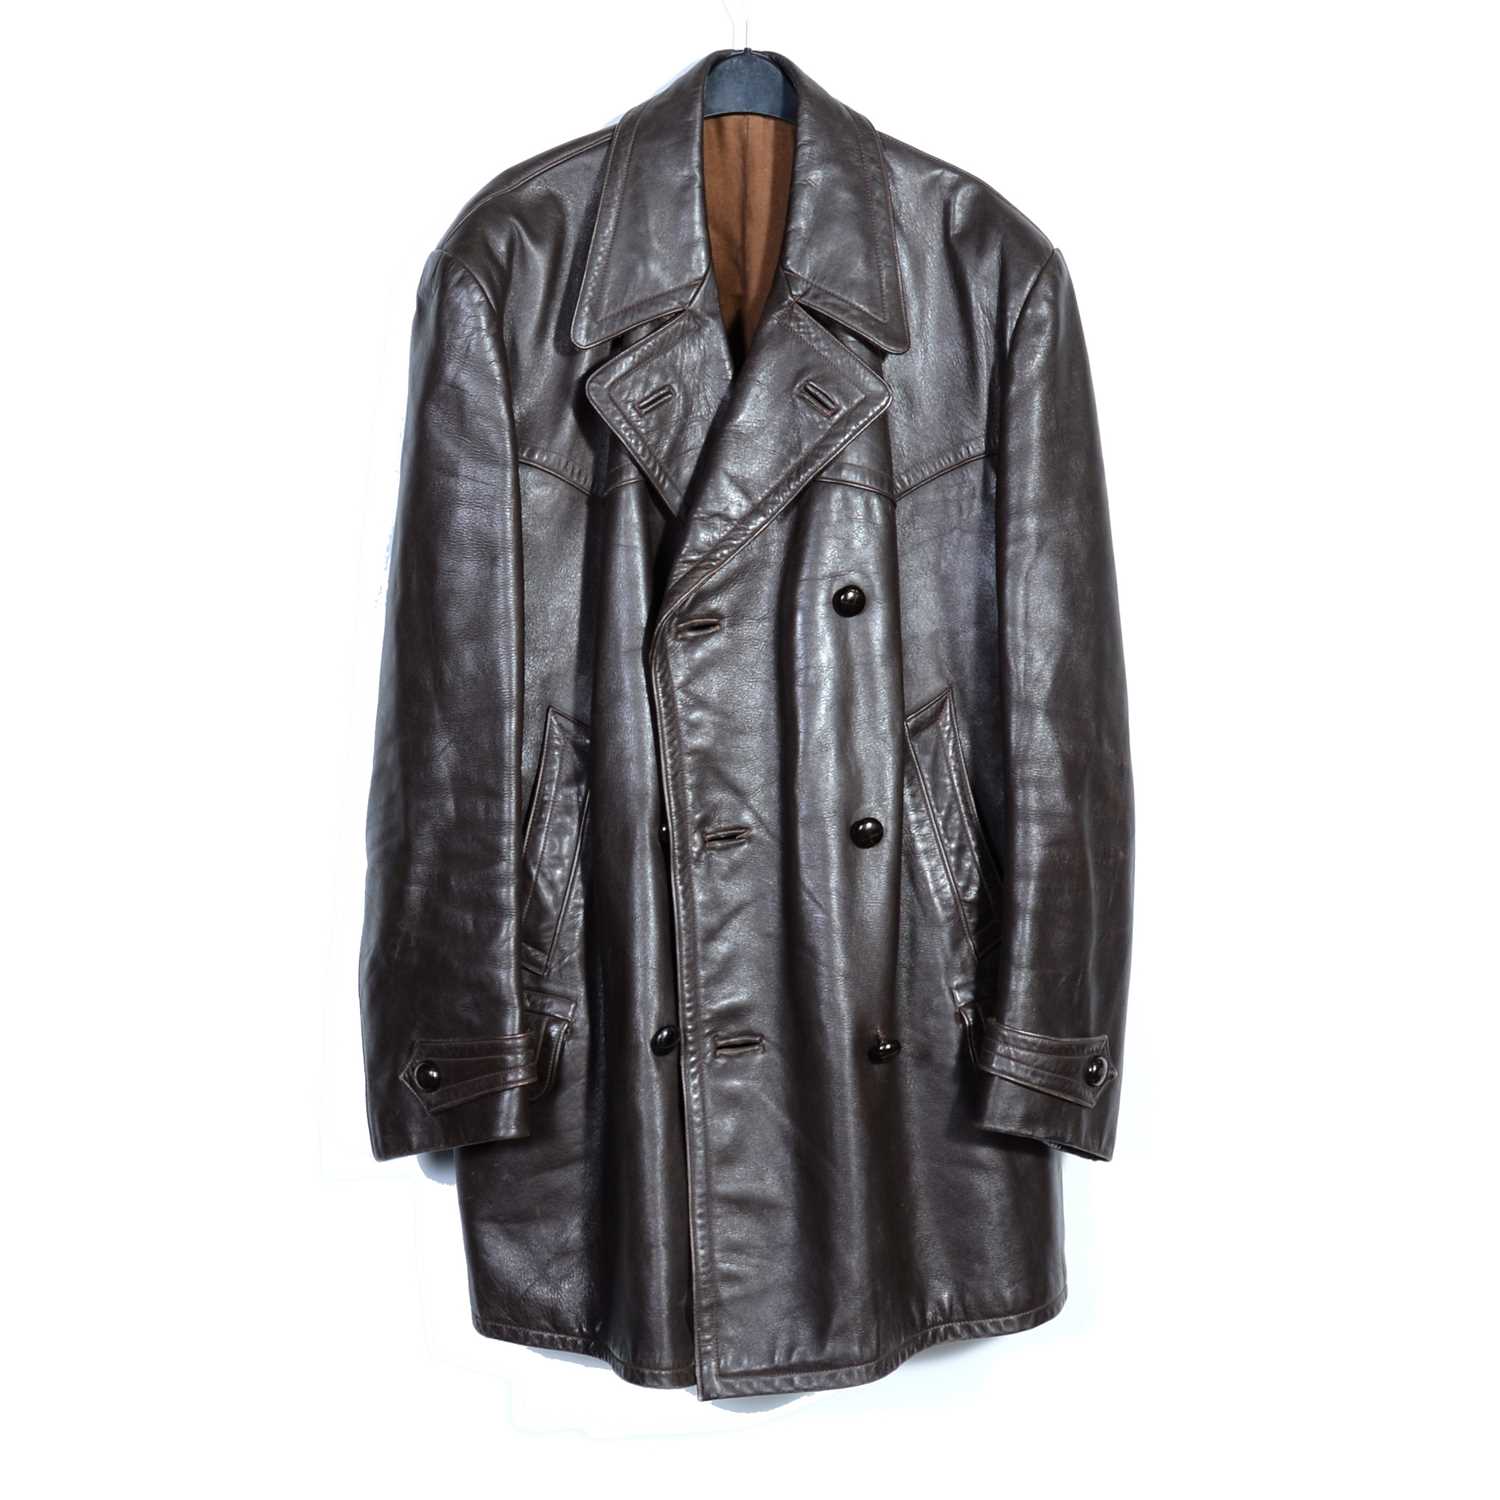 Five assorted leather long flights coats/ jackets